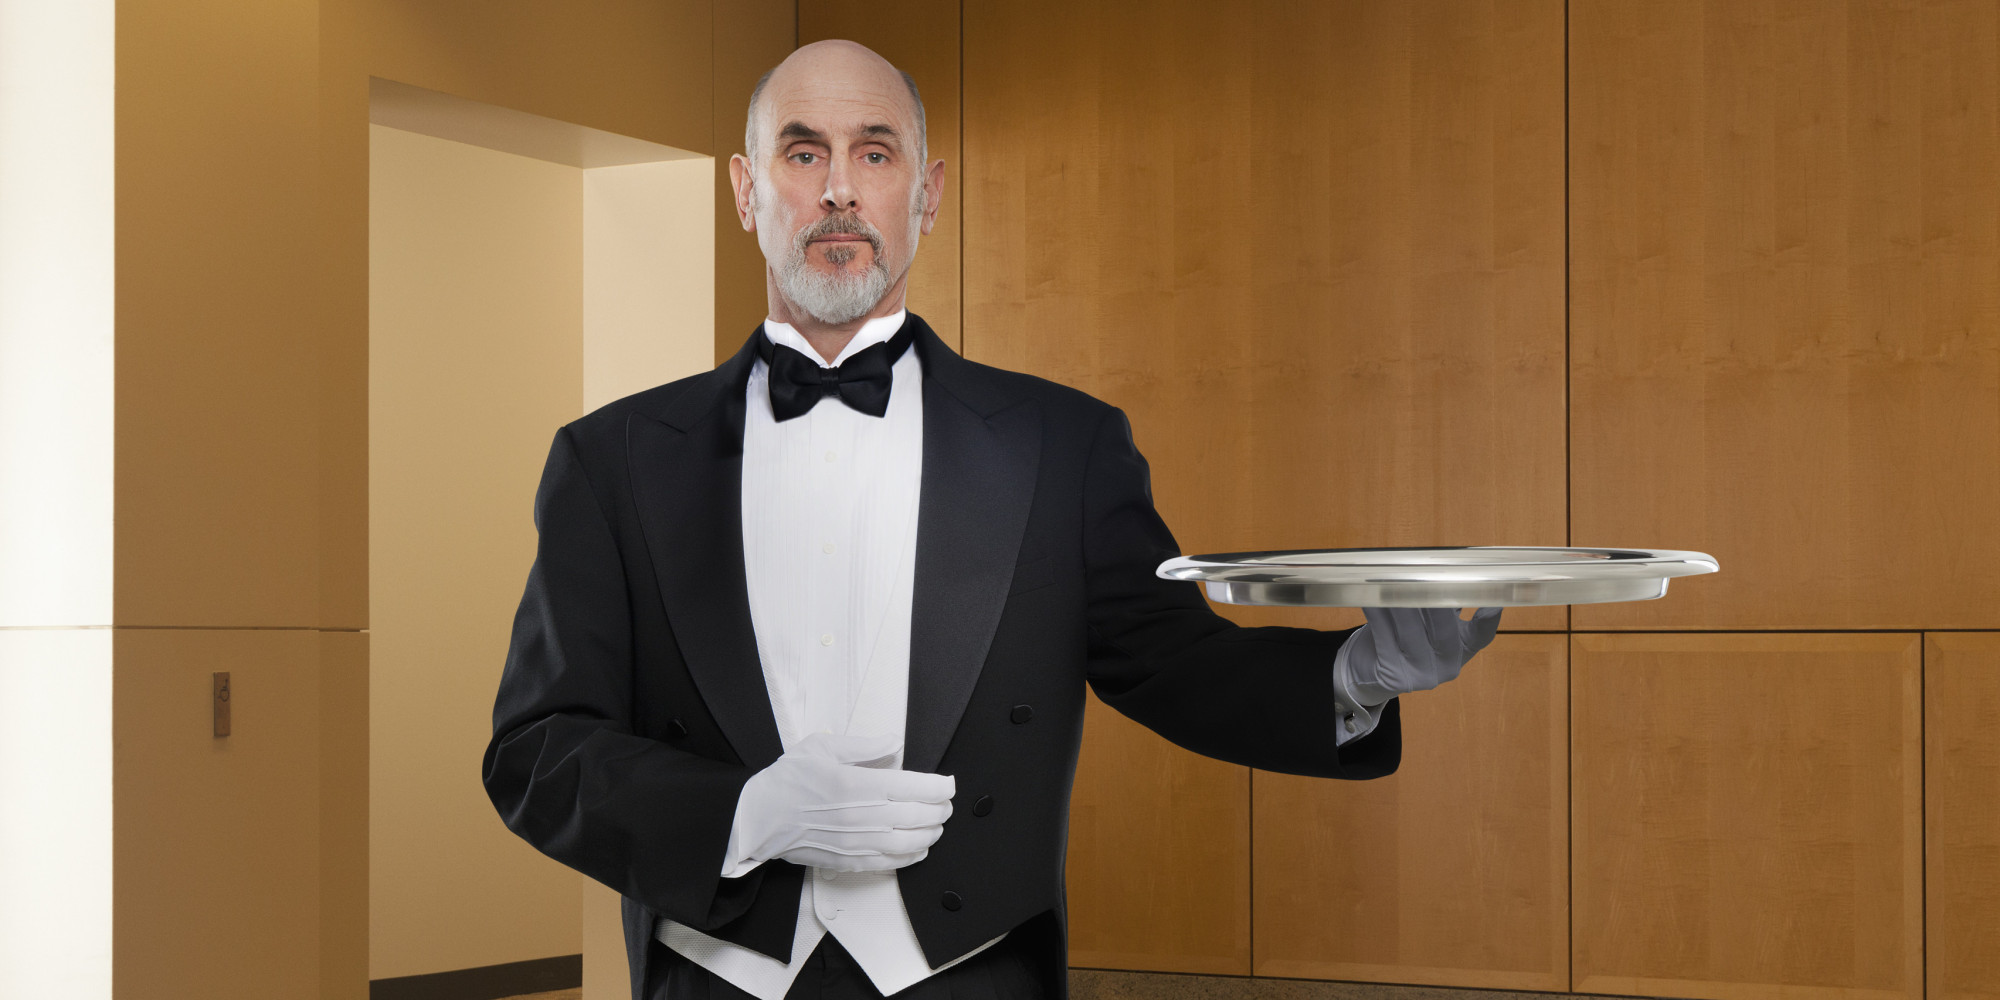 Hotel waiter